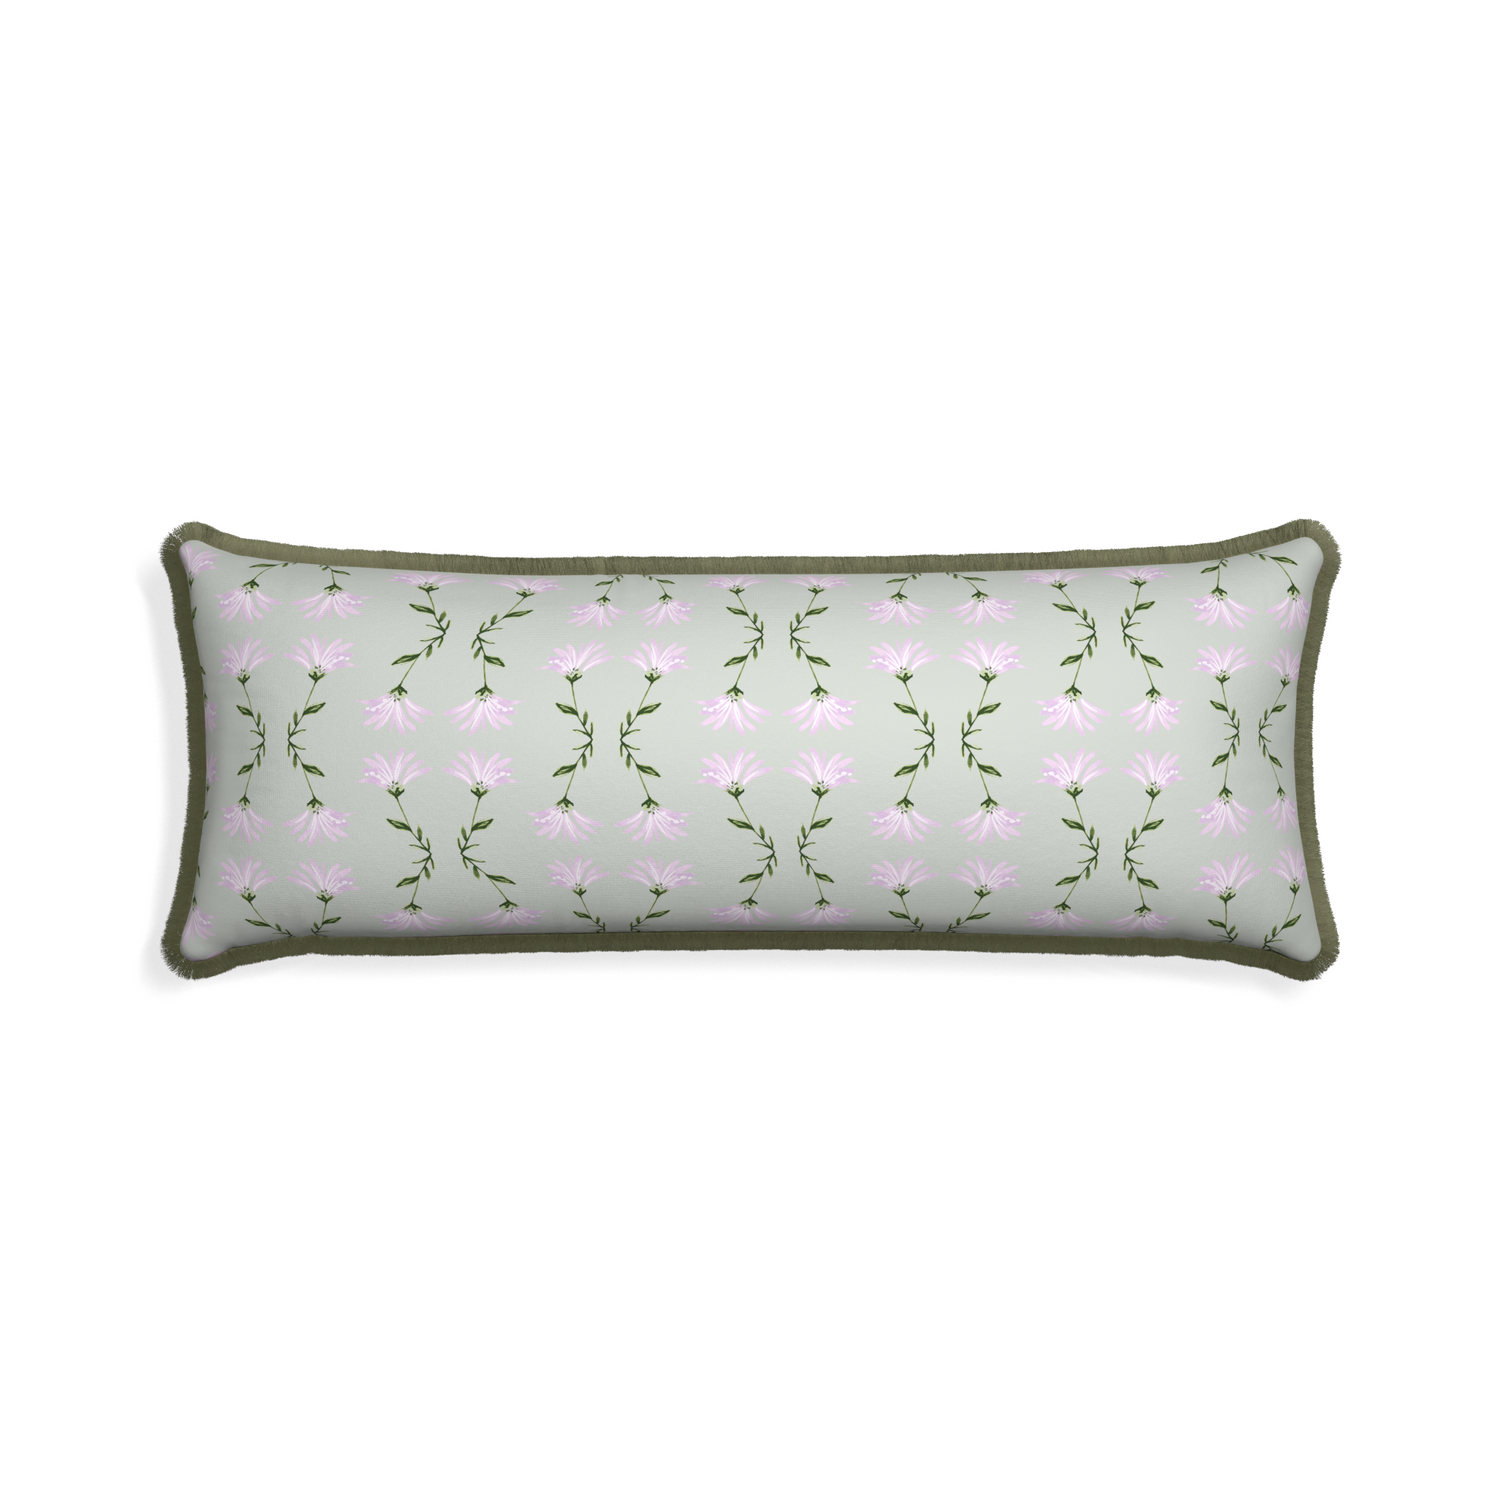 Xl-lumbar marina sage custom pillow with sage fringe on white background